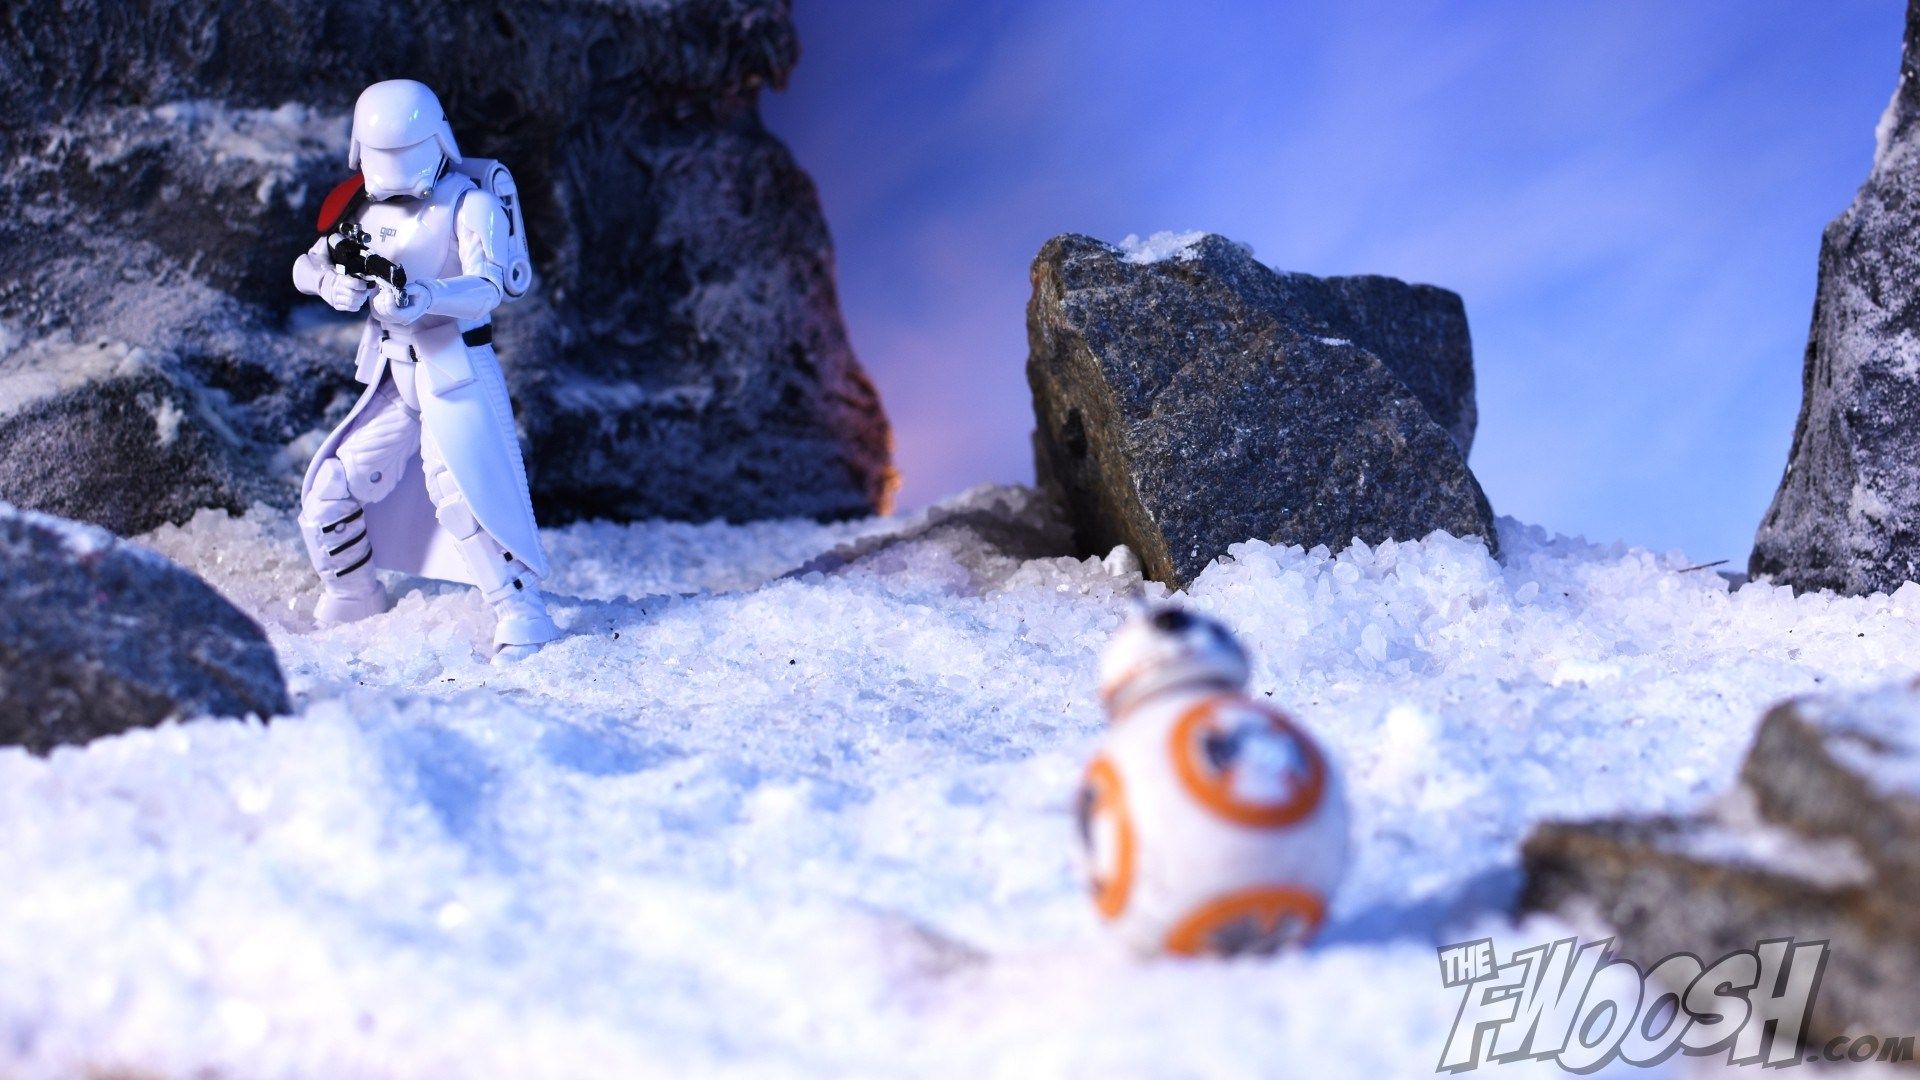 Hasbro: Star Wars Black Series First Order Snowtrooper Officer